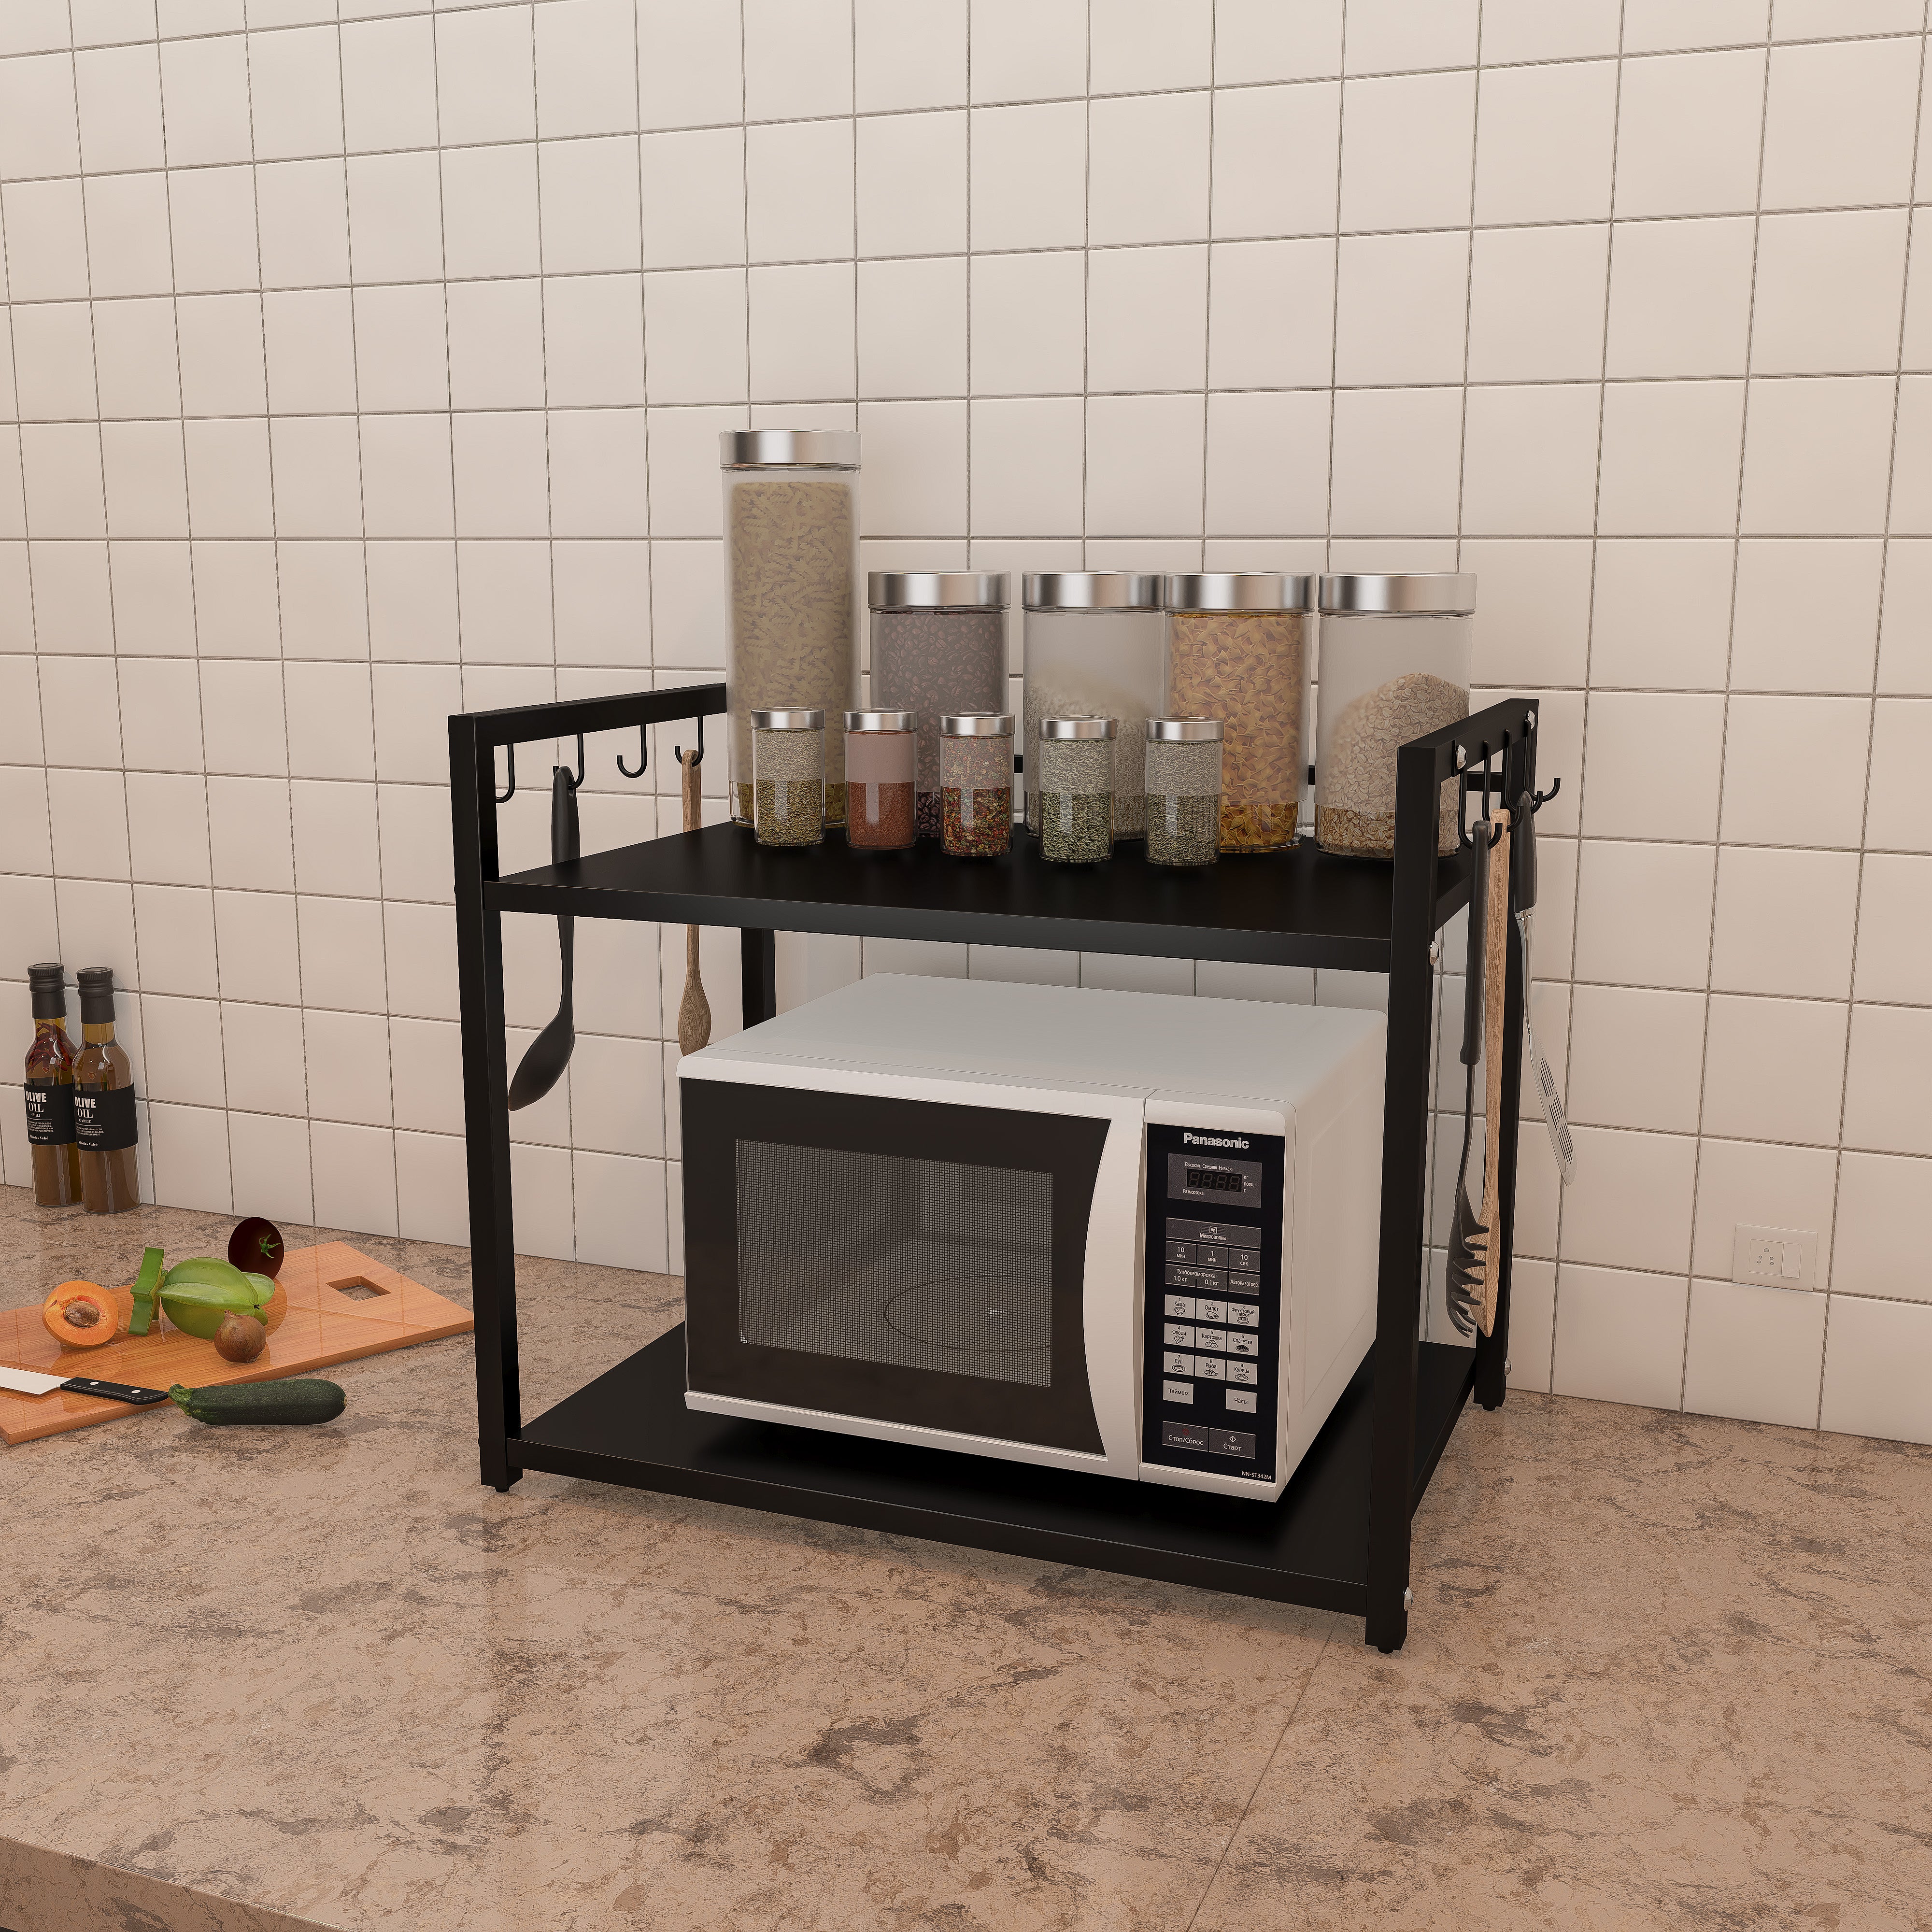 Metal Microwave Stand - Double Platform (Black)